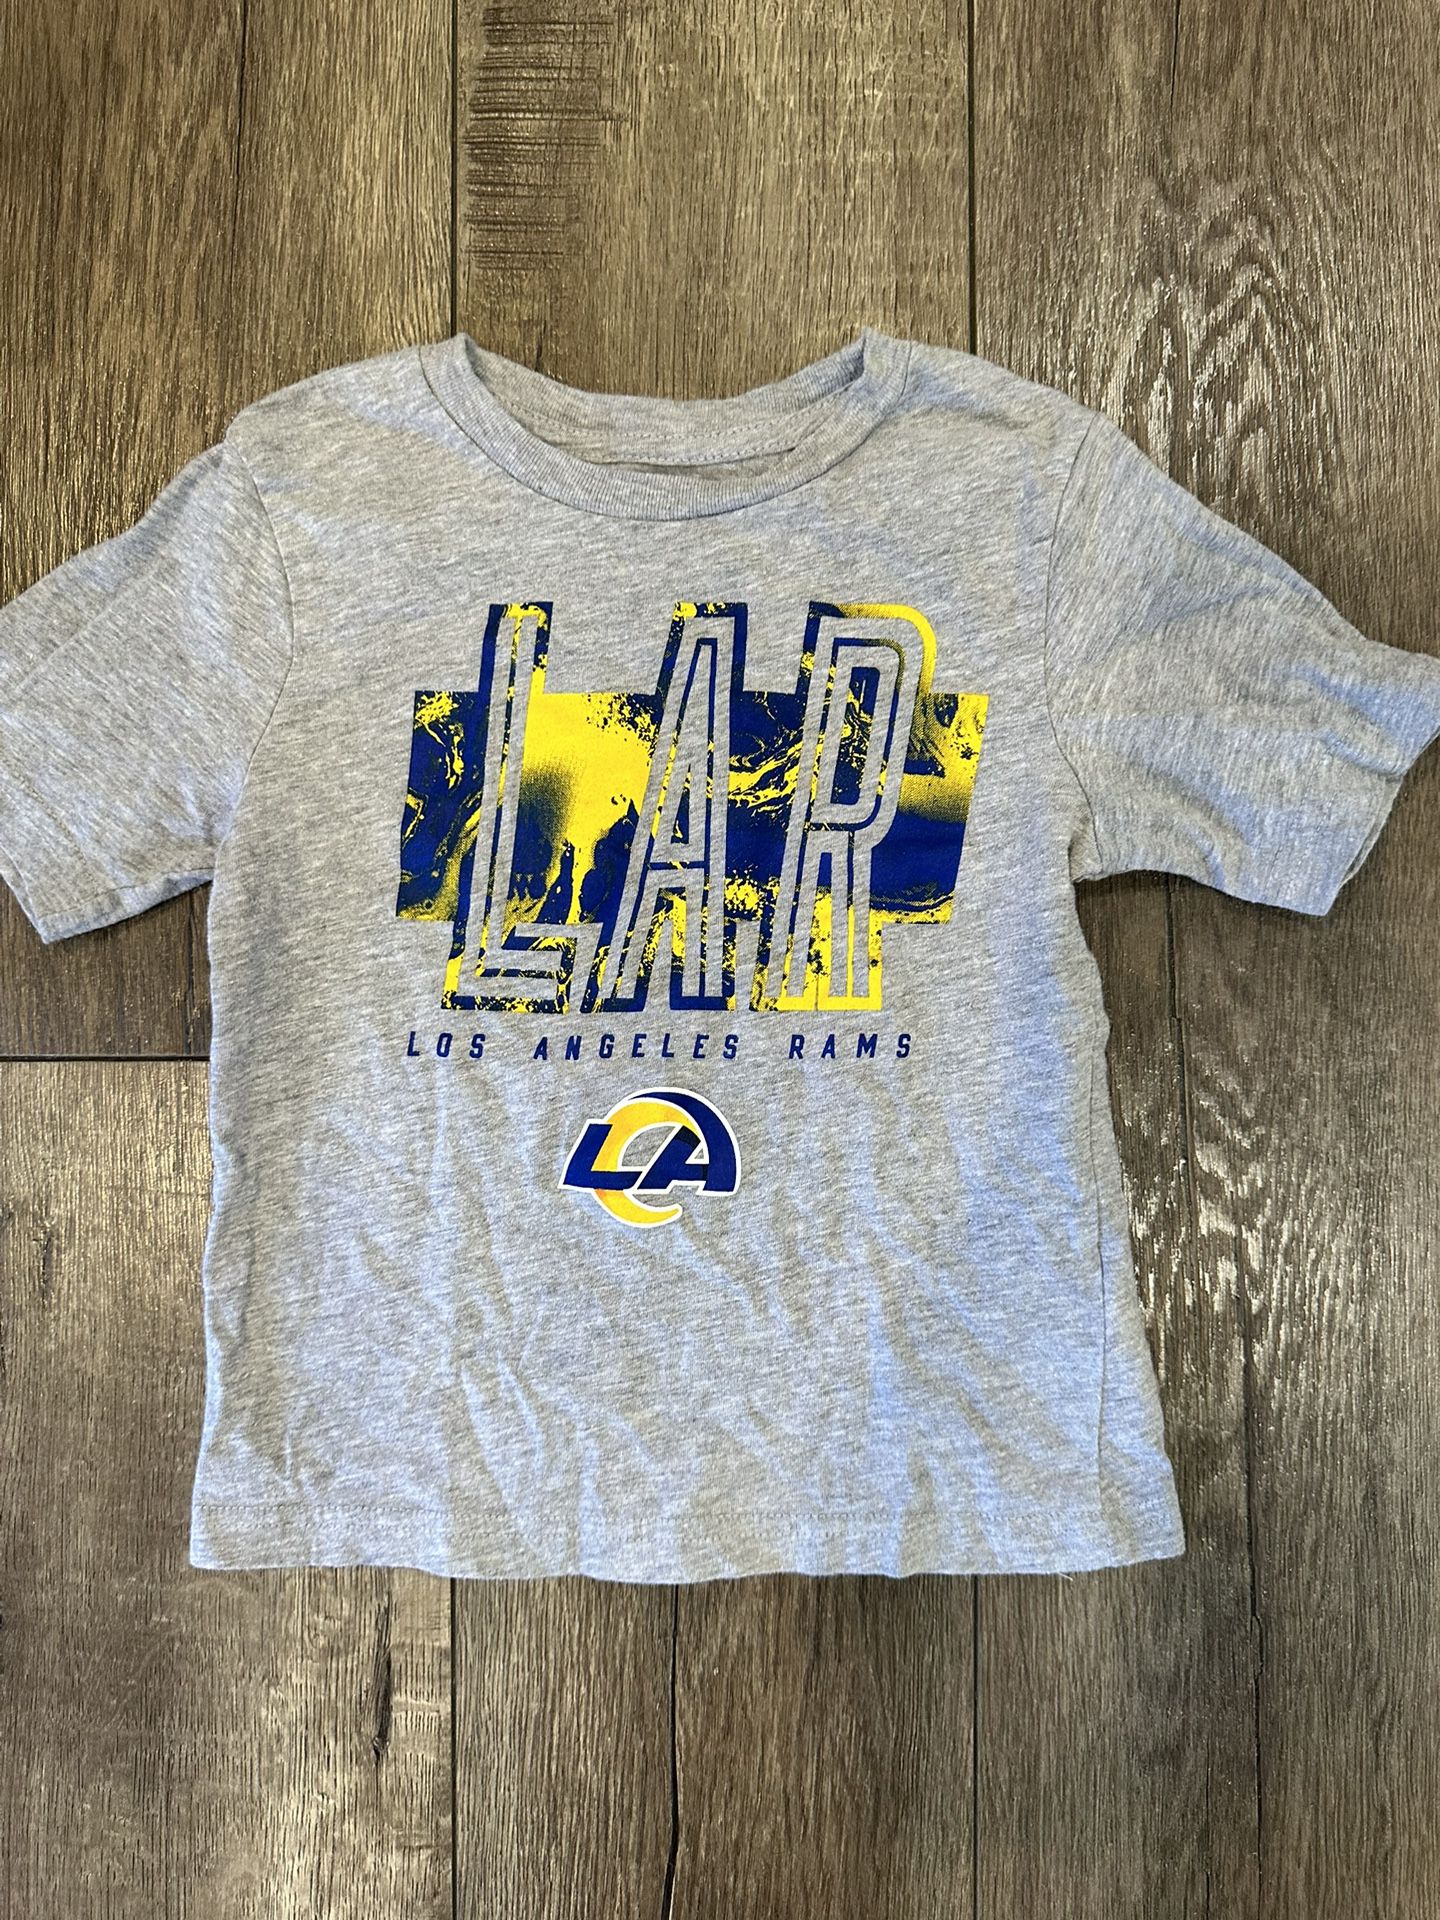 La Rams Toddler Shirt 